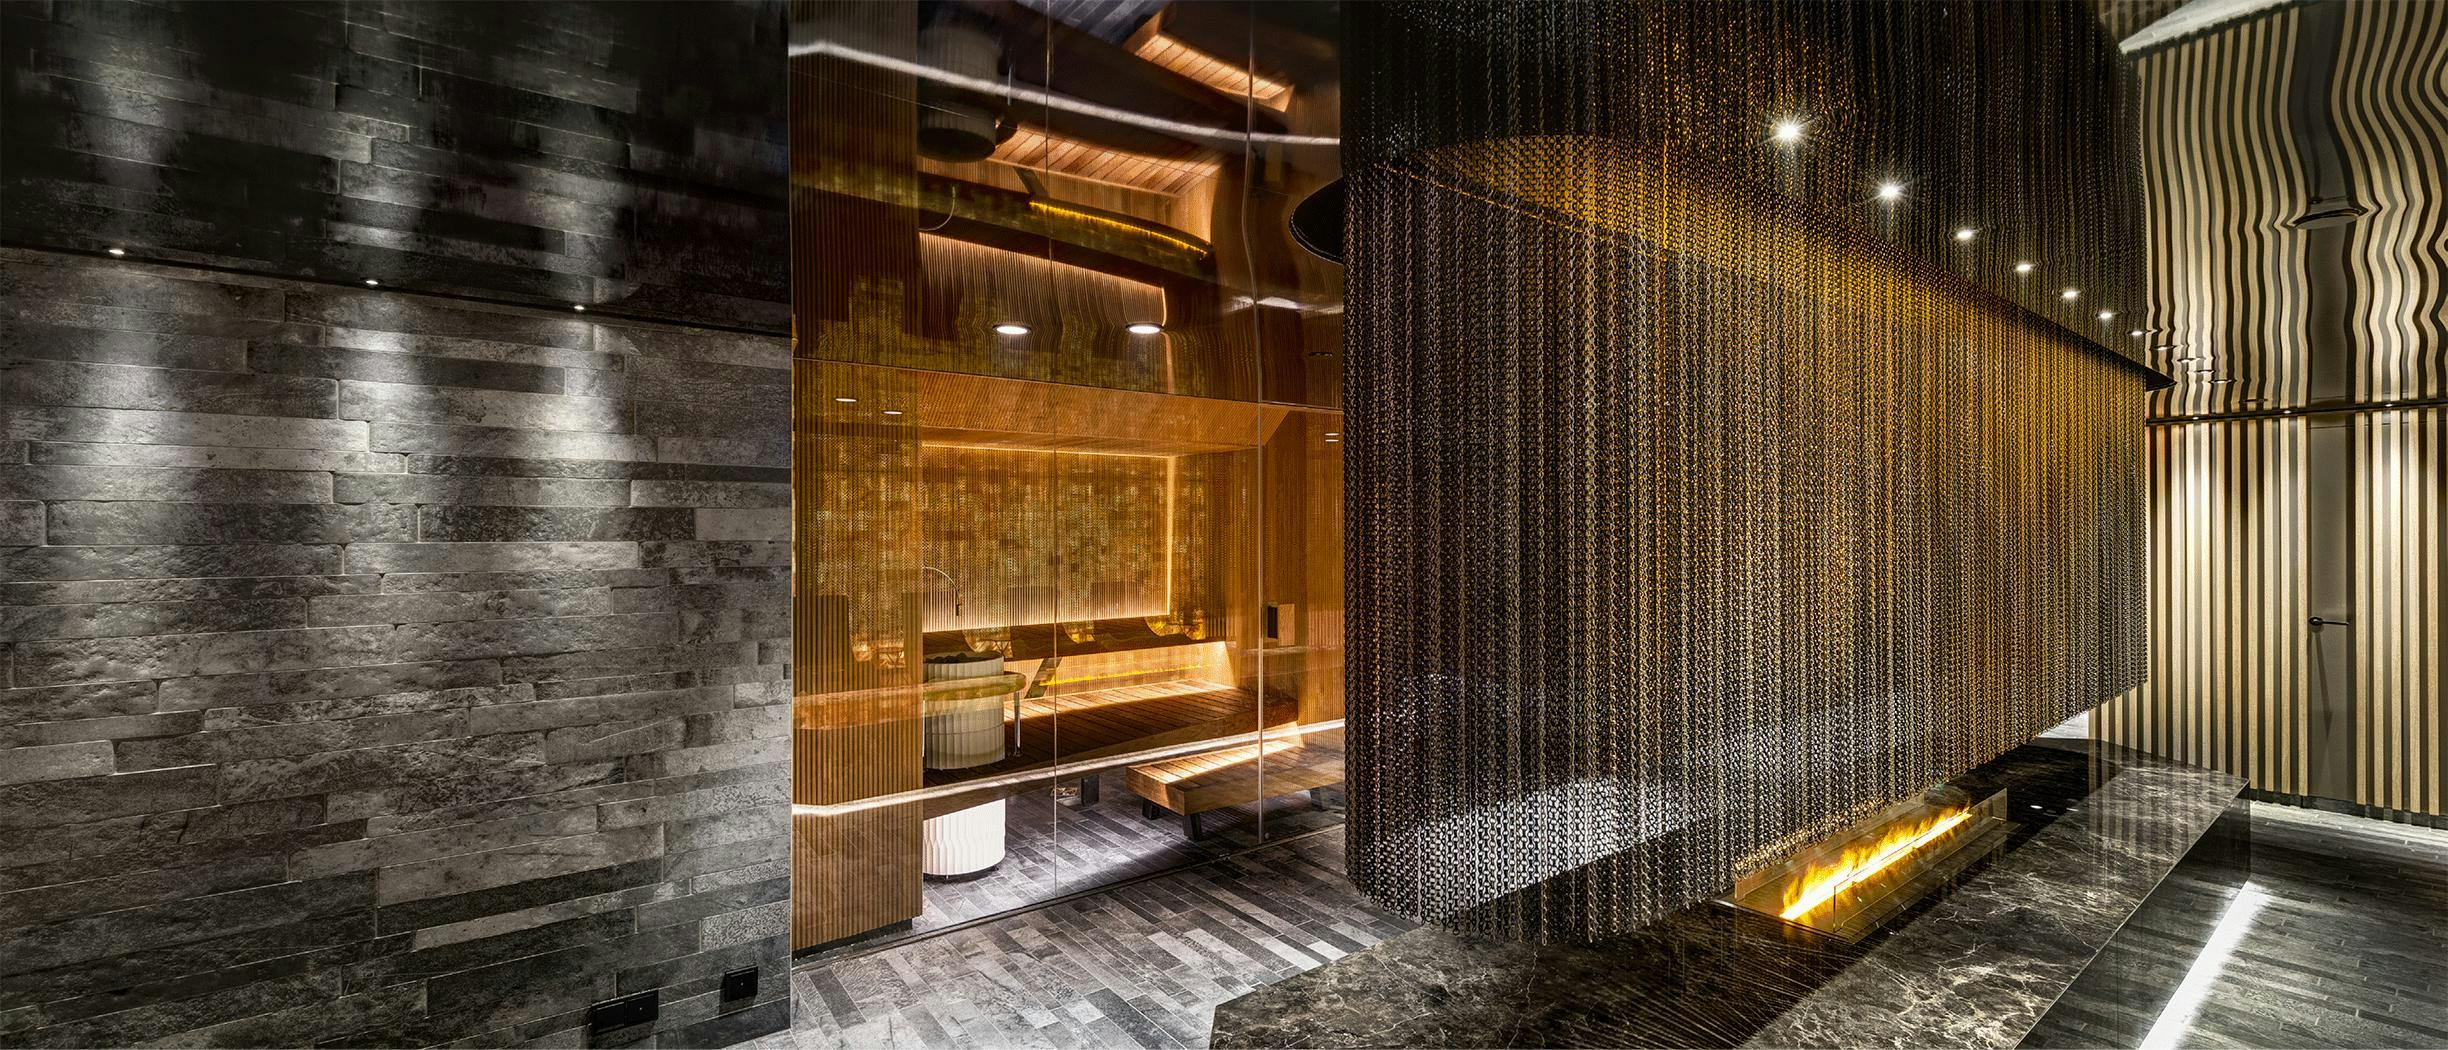 Relaxation area sauna